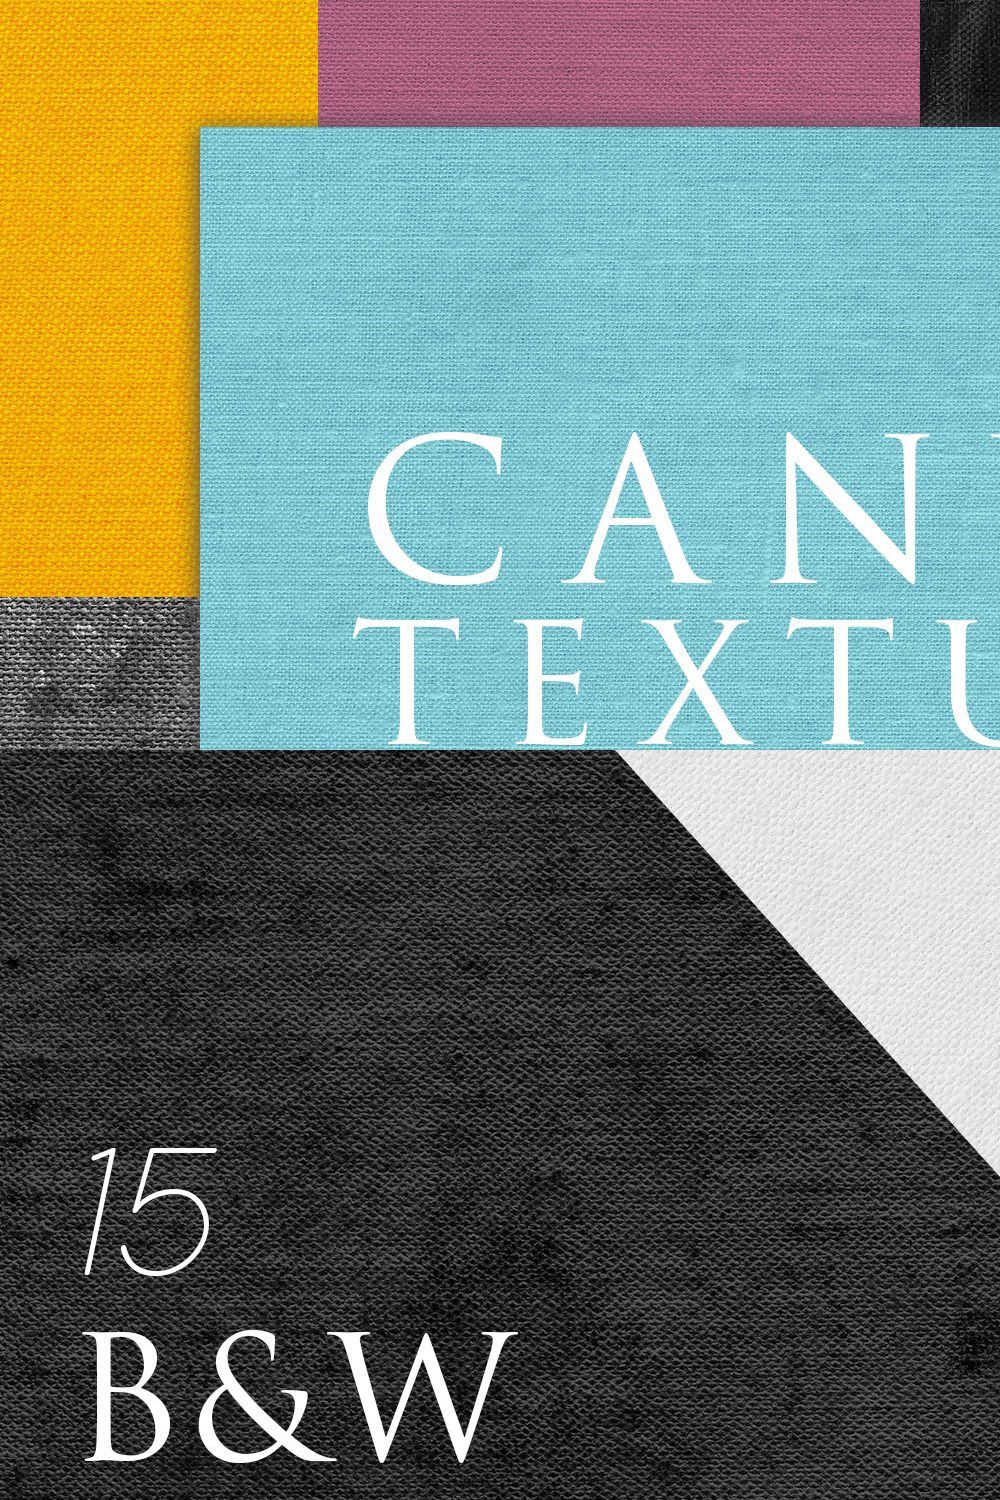 85 Various Canvas Textures pinterest preview image.